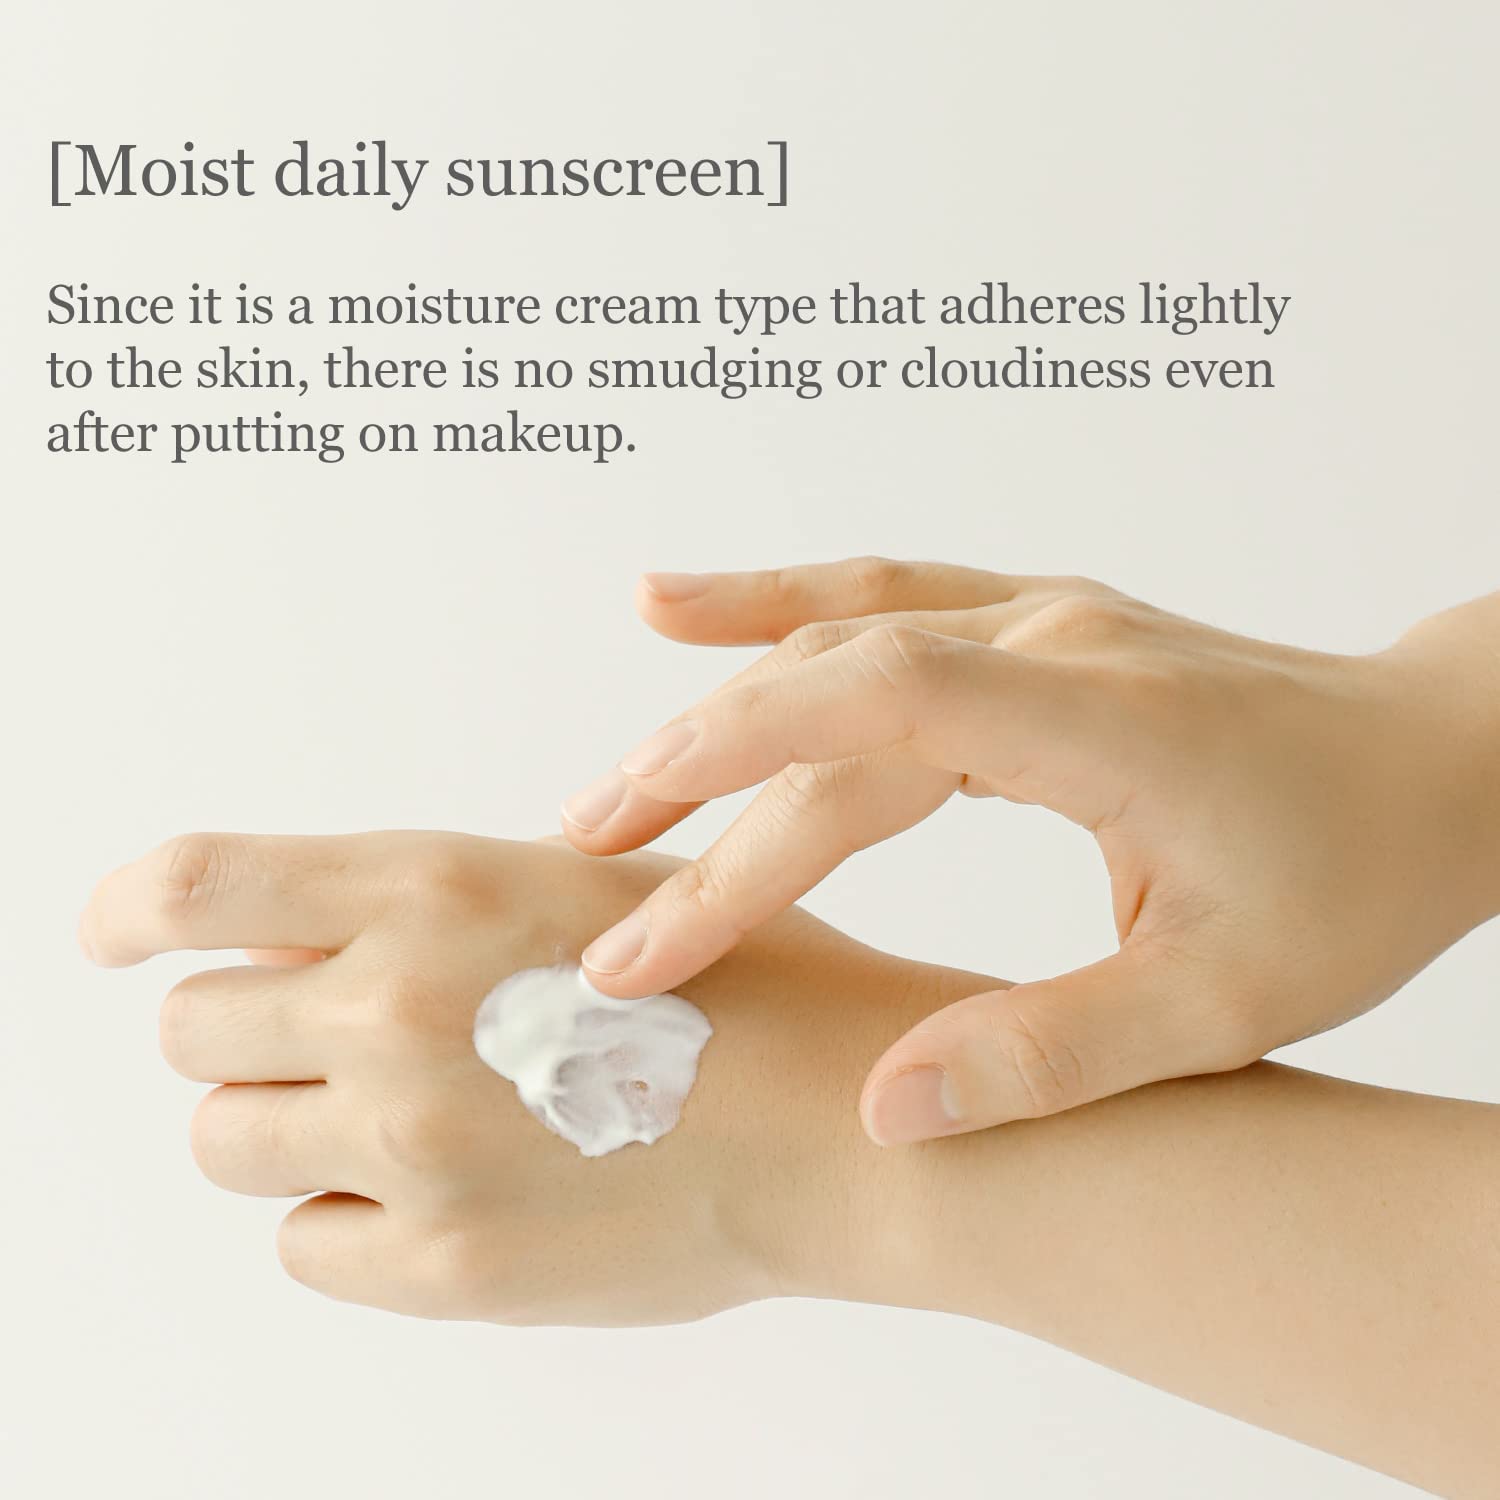 [ Beauty of Joseon ] Relief Sun : Rice + Probiotics Sunscreen (50ml x 2ea) x 3 BOX SET